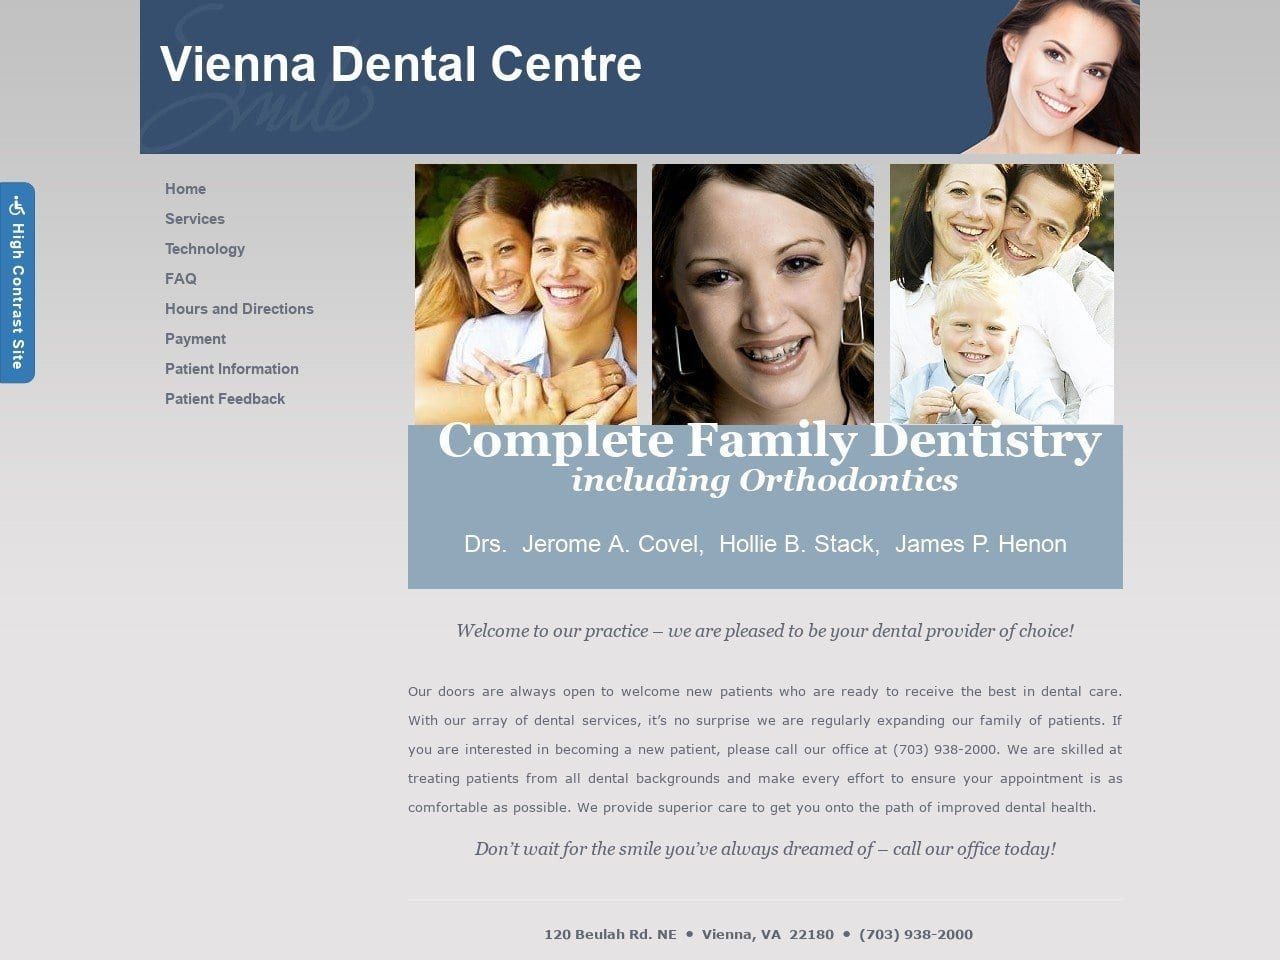 Covel Jerome Dentist Website Screenshot from viennadentalcentre.com